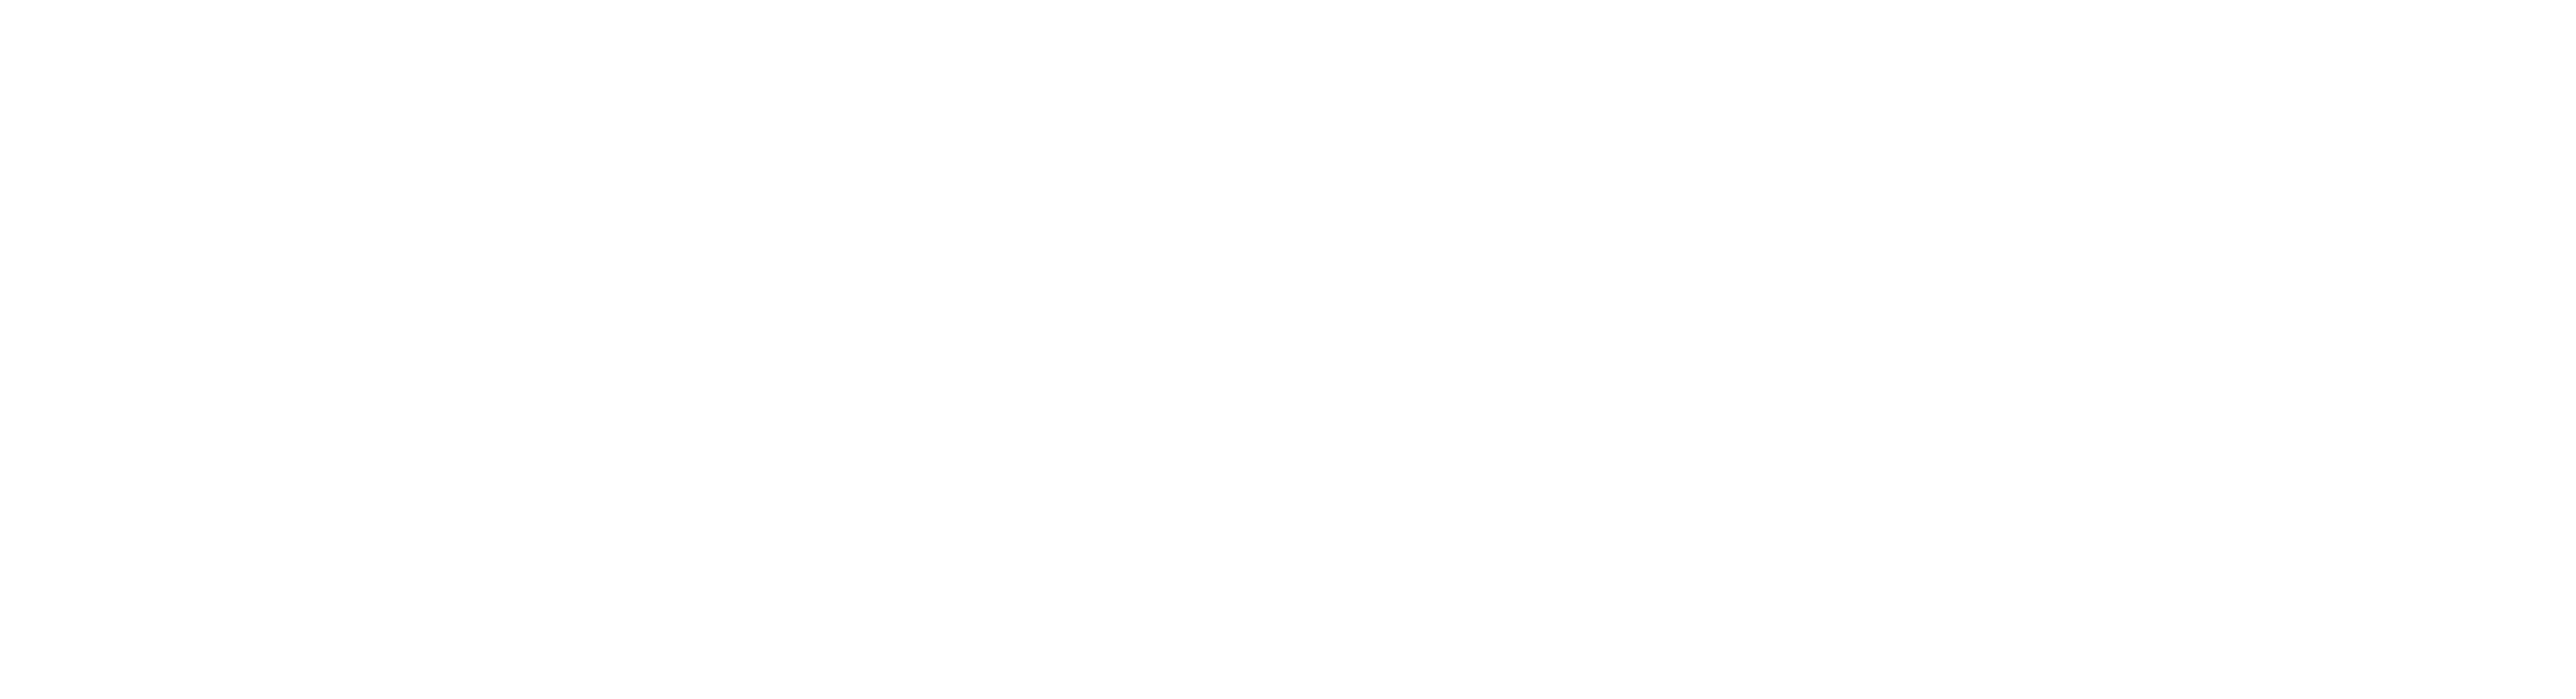 Prince William County Department of Economic Development logo